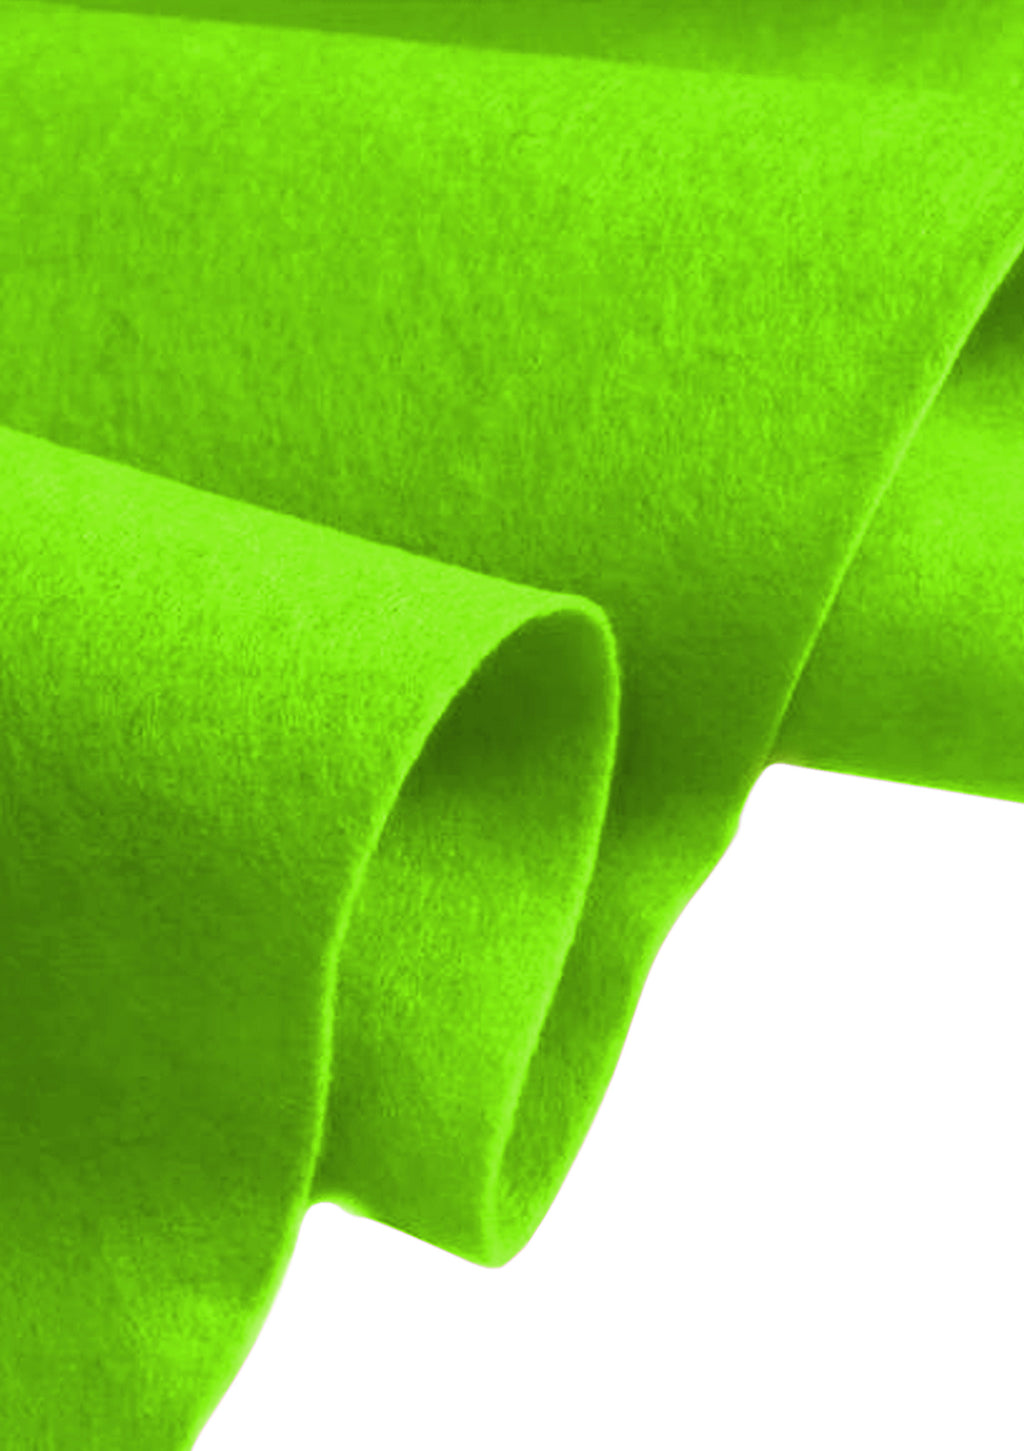 Classic Neon Green Felt Fabric